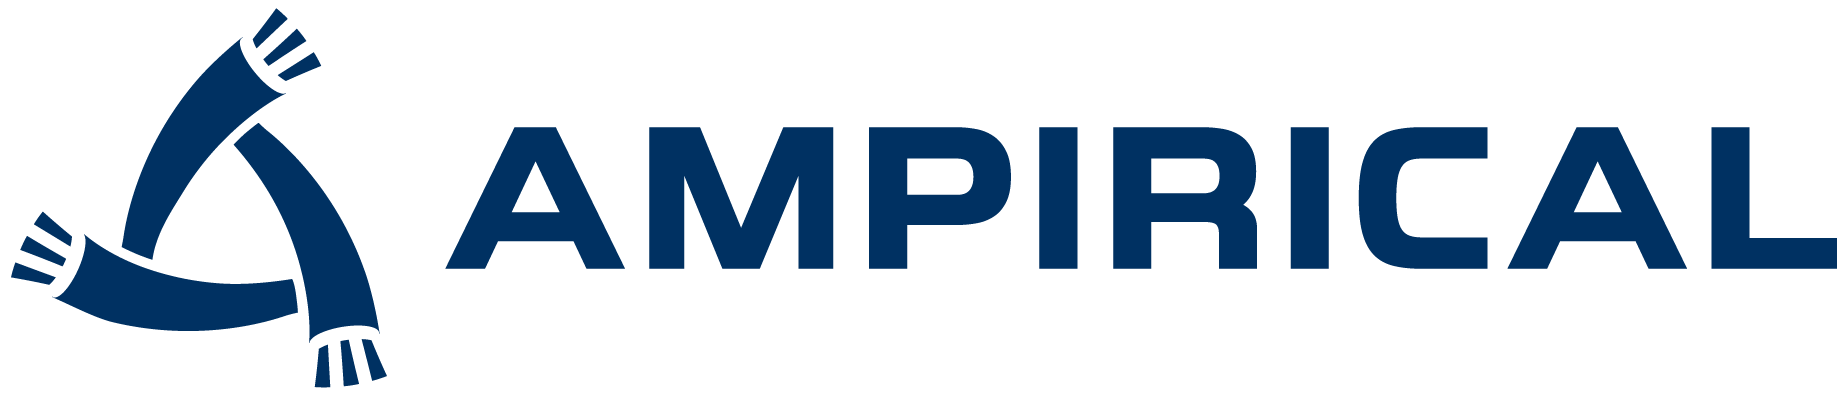 Ampirical Company Logo